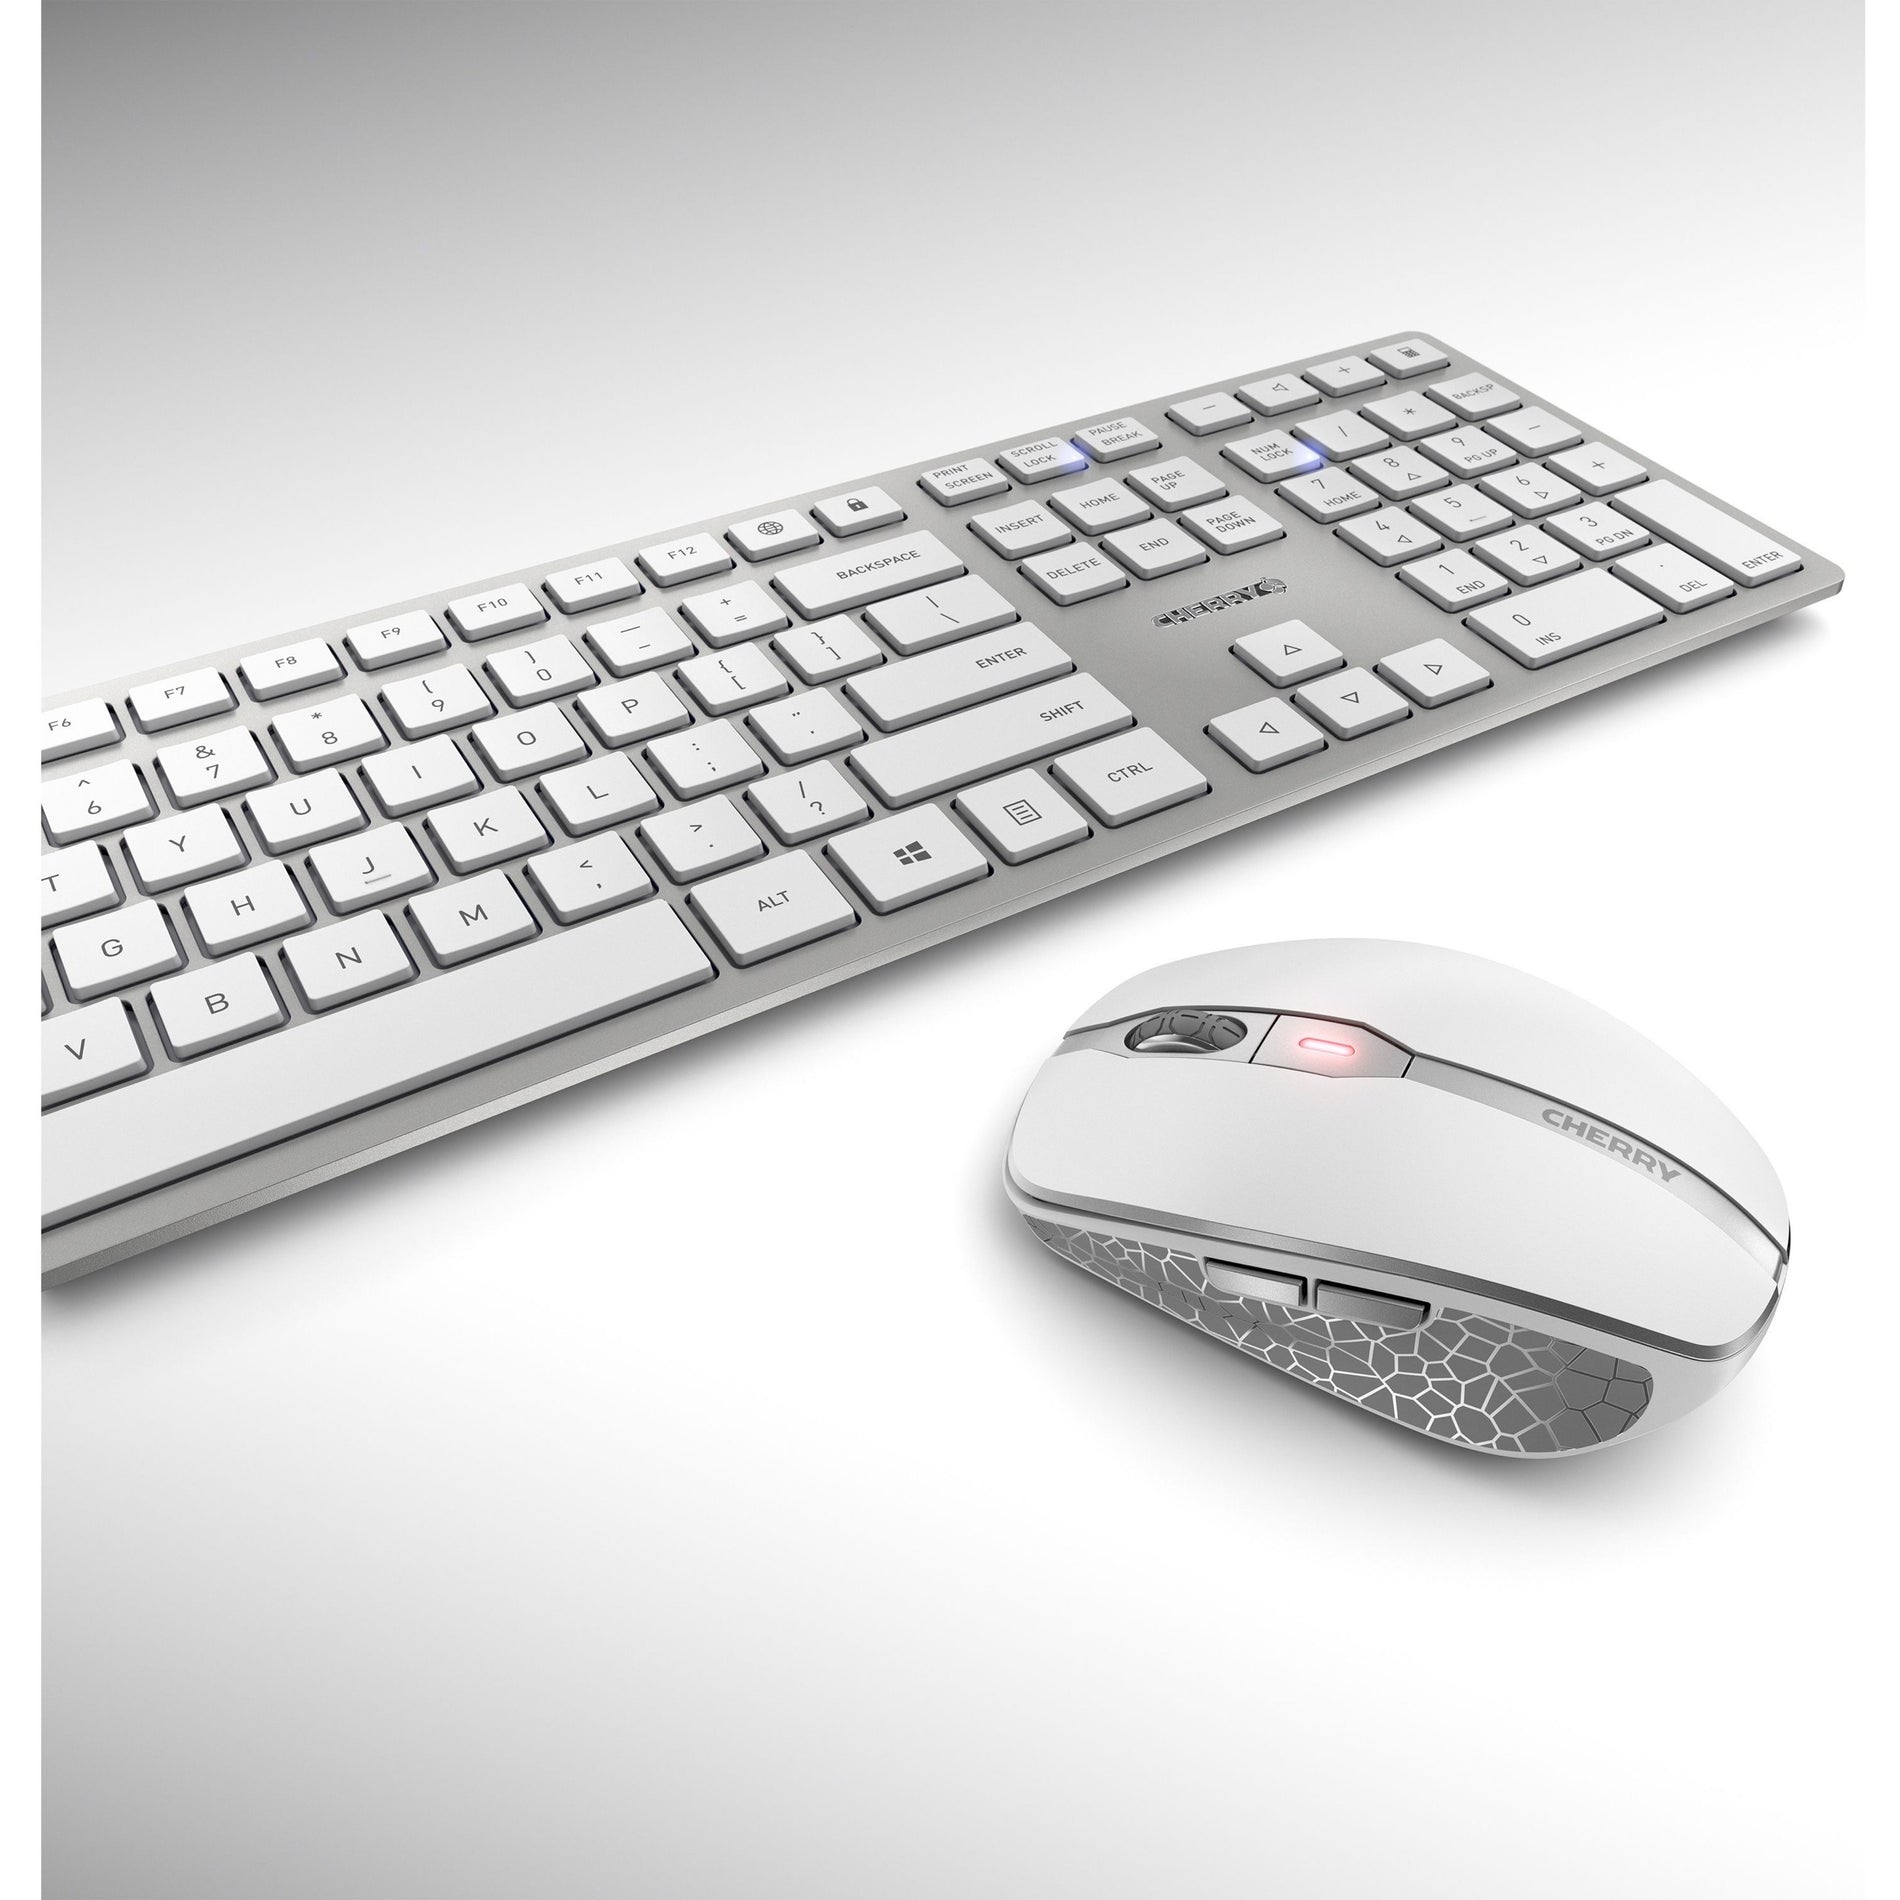 CHERRY JD-9100US-1 DW 9100 SLIM مجموعة لوحة مفاتيح وفأرة لاسلكية قابلة لإعادة الشحن، فضي/أبيض، USB